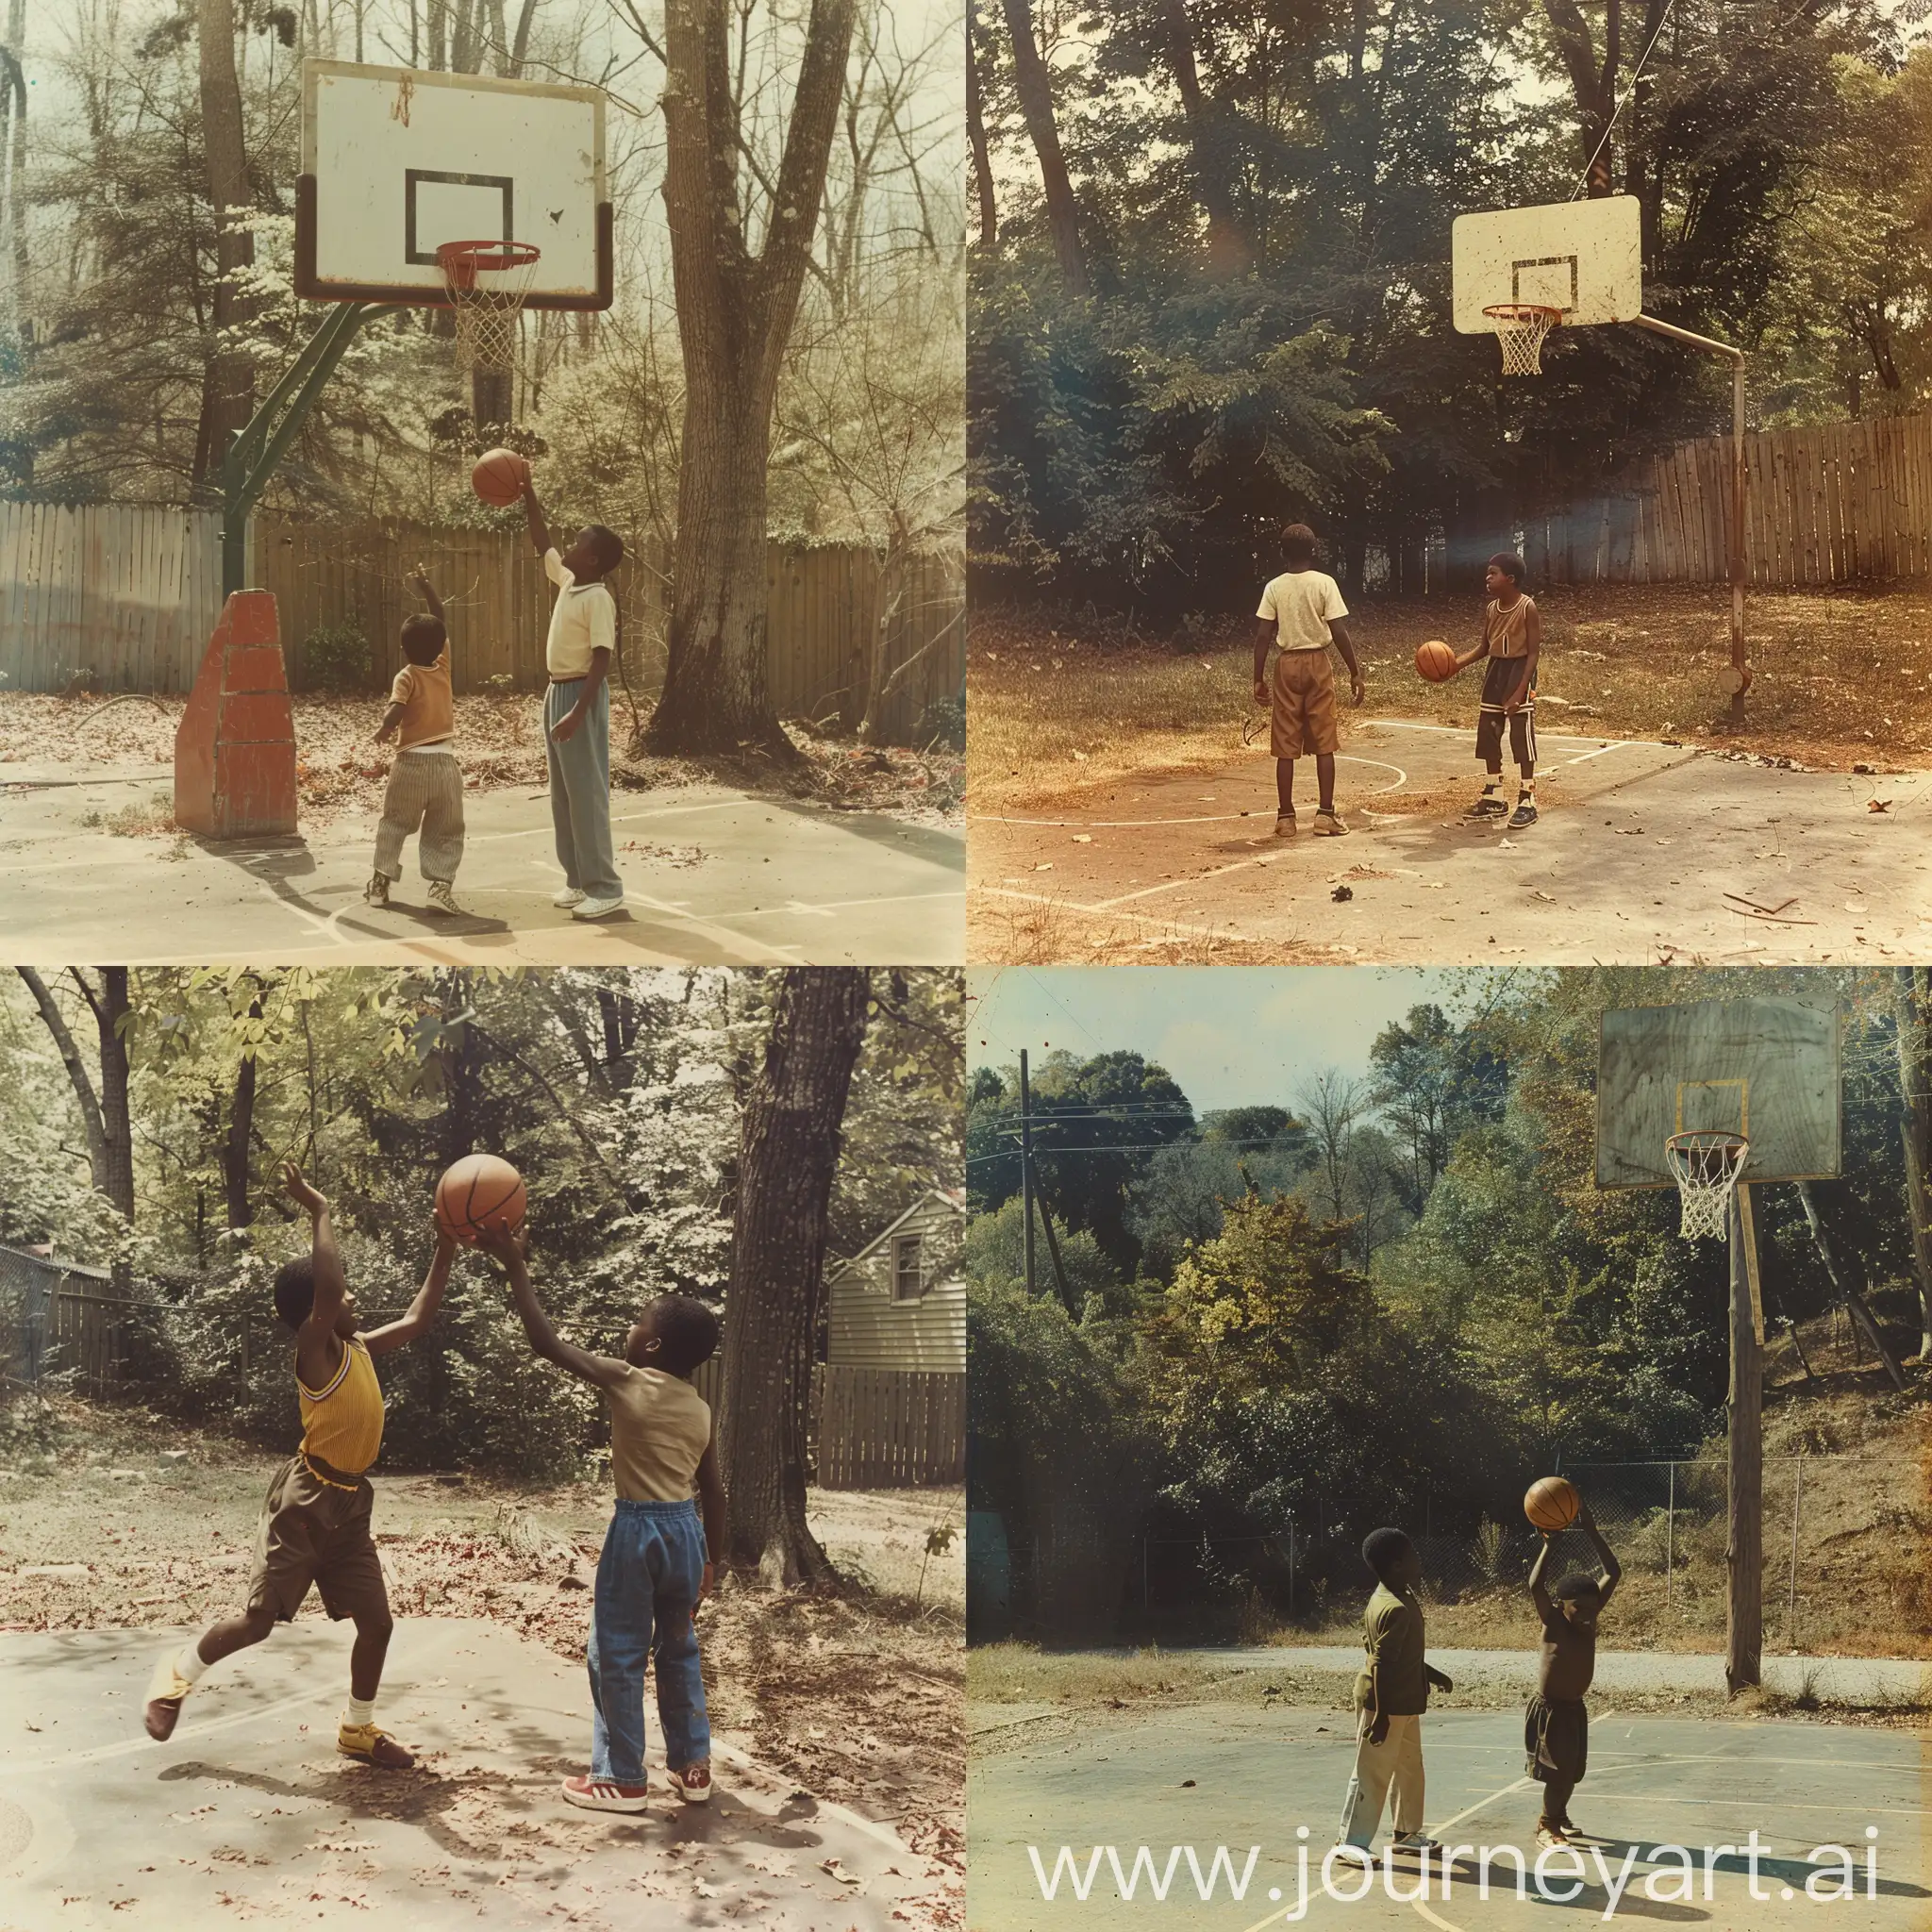 Black-Kids-Playing-Basketball-in-Sunny-Backyard